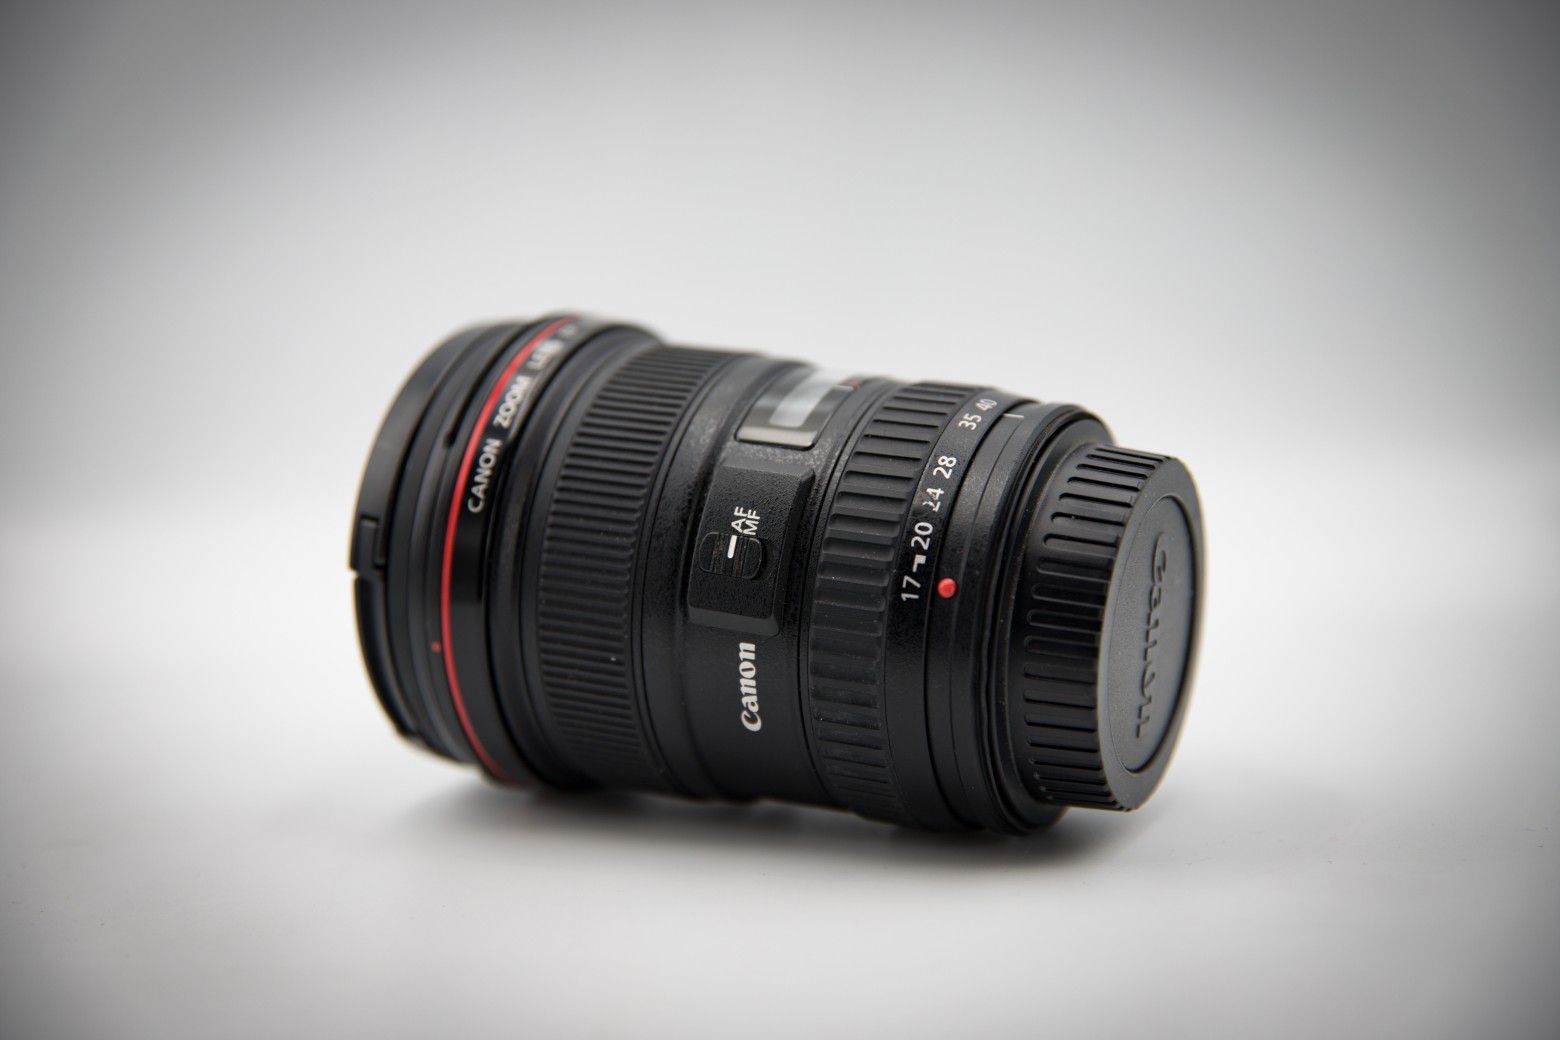 Canon 17-40mm f4L USM lens, near mint condition